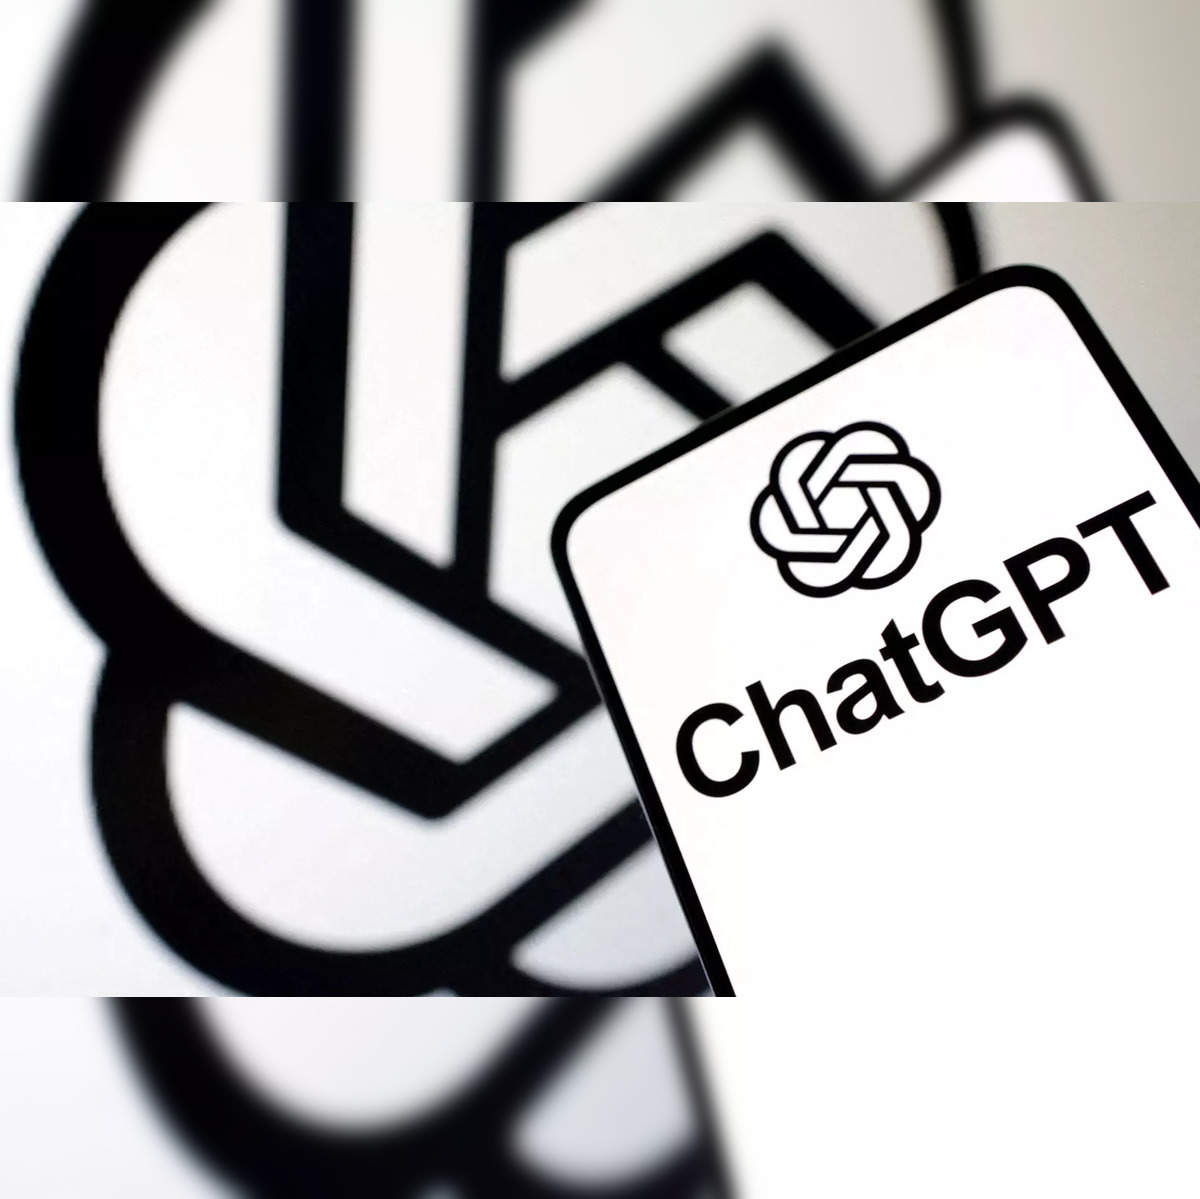 ChatGPT ? More like ChadGPT : r/ChatGPT